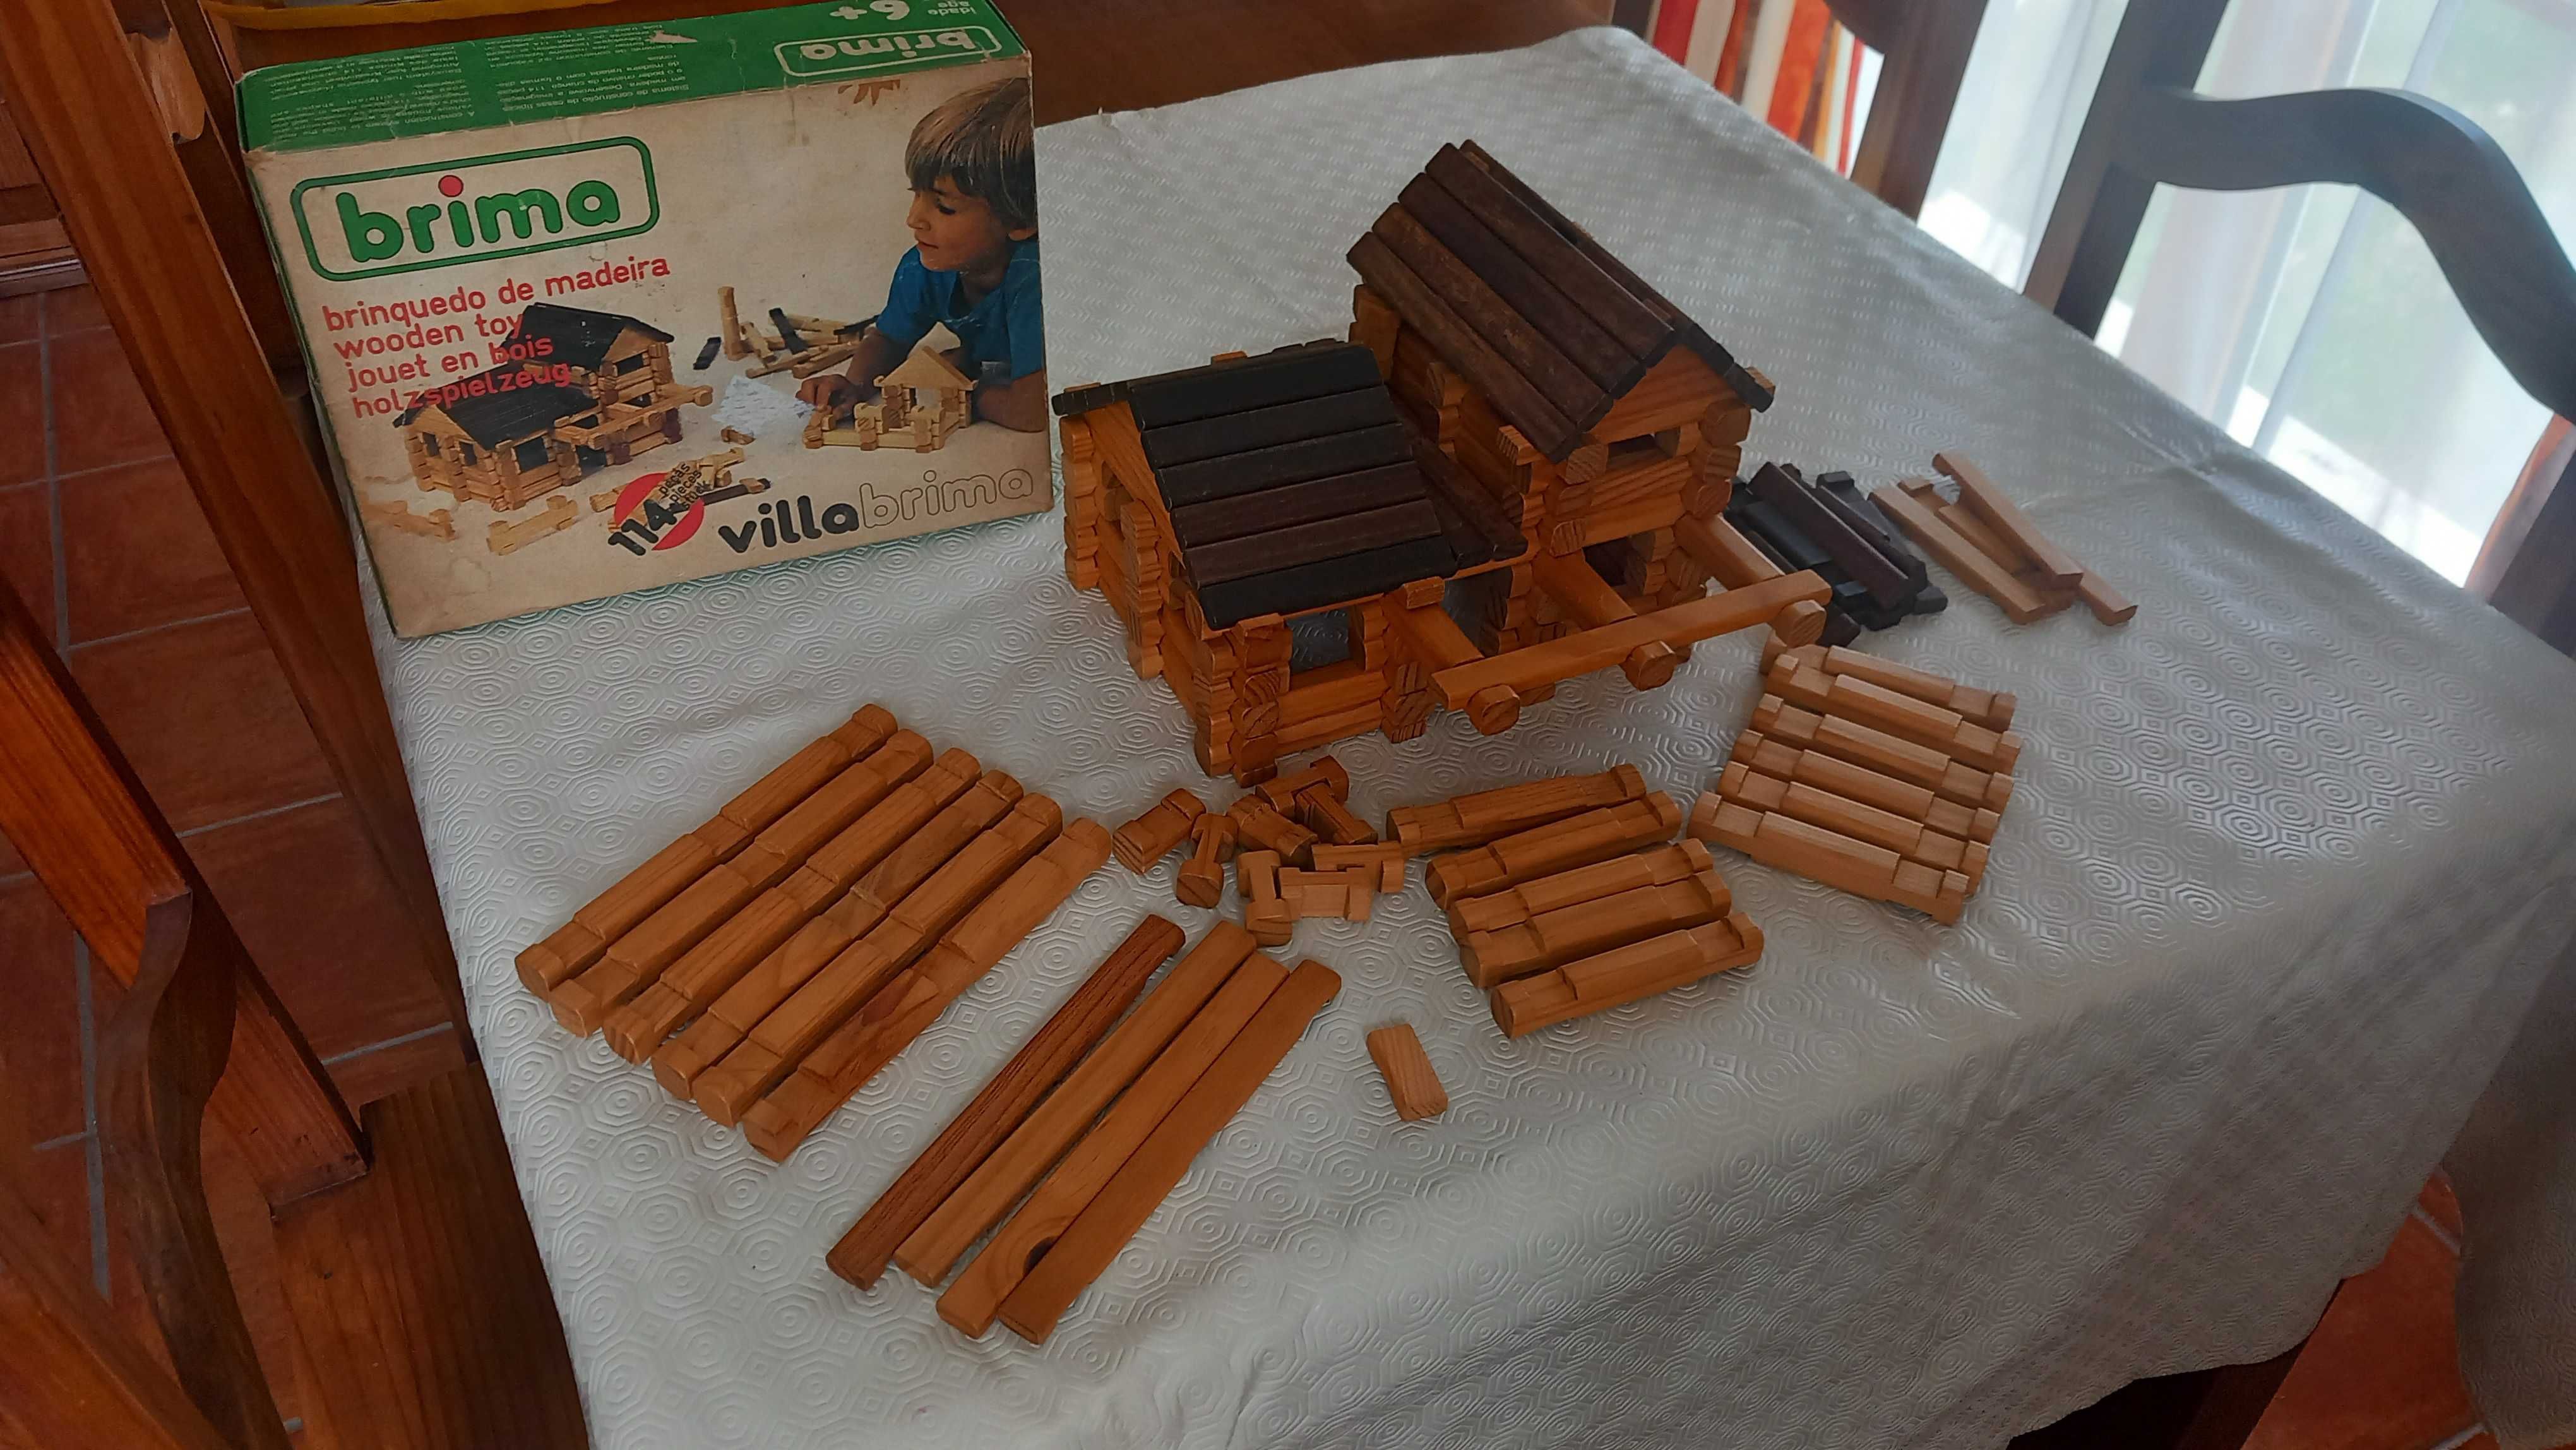 VILLA BRIMA brinquedo de madeira